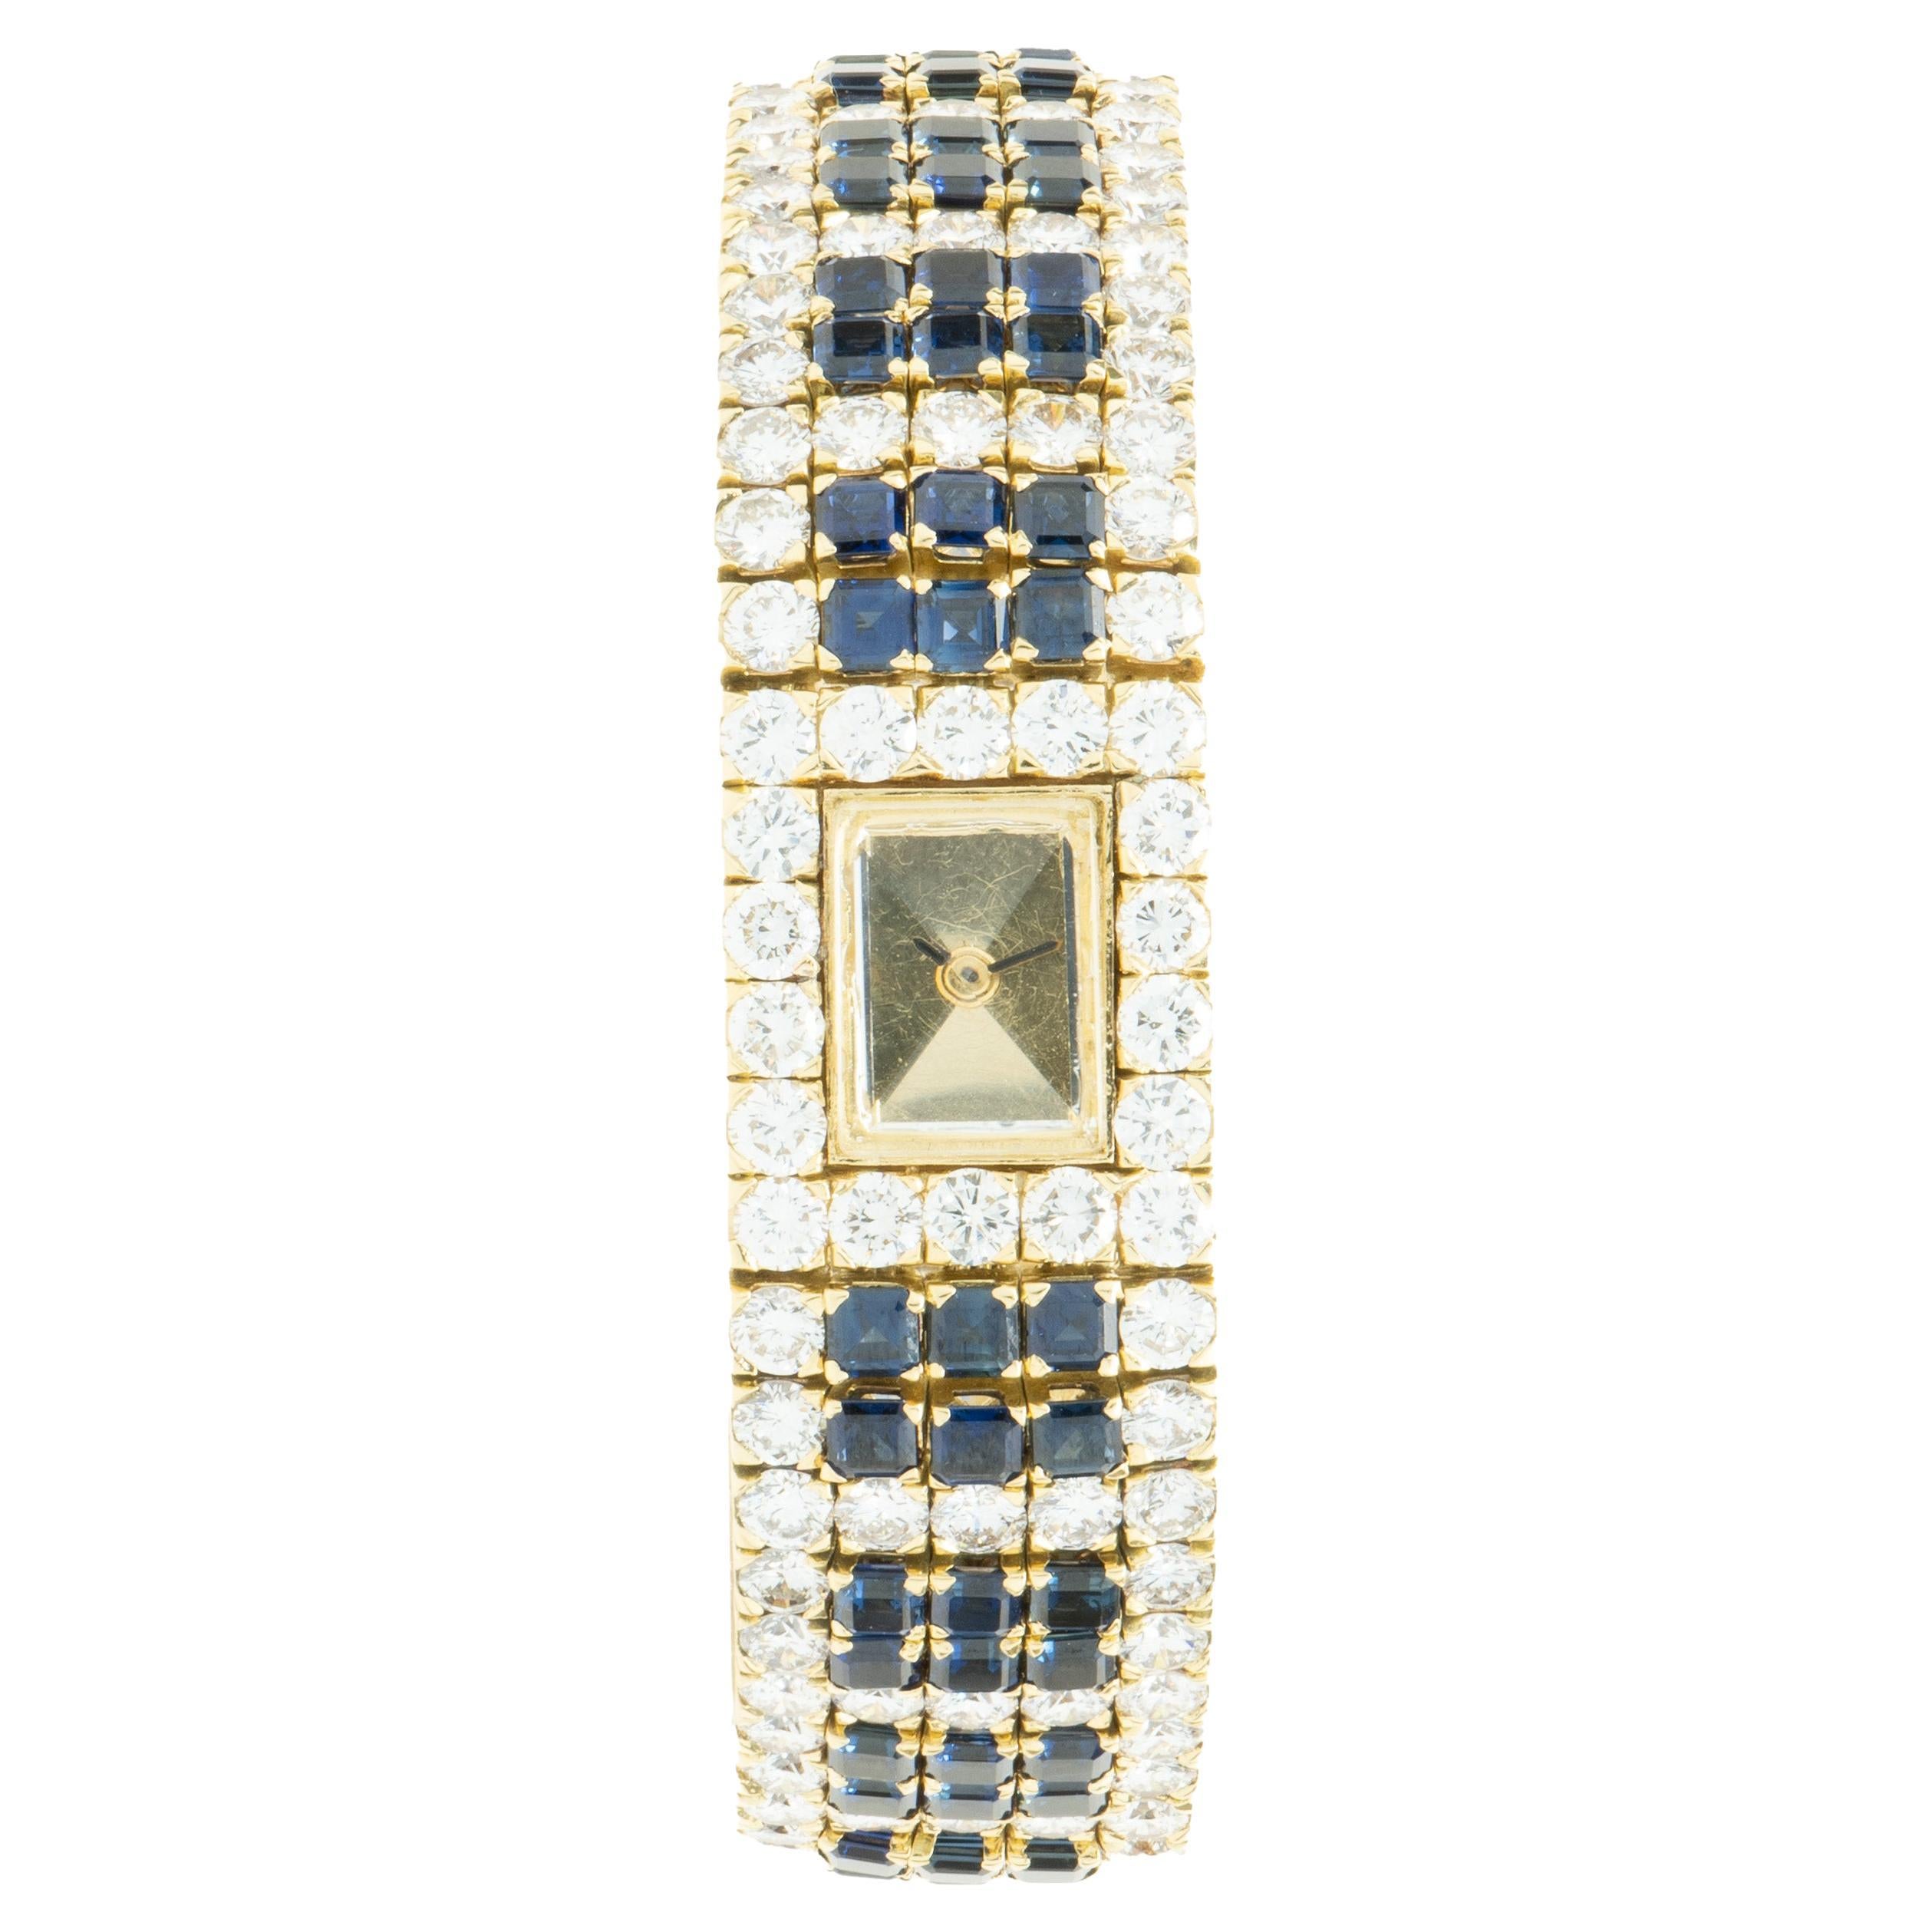 Gerald Genta 18 Karat Yellow Gold Diamond and Sapphire Link Bracelet Watch